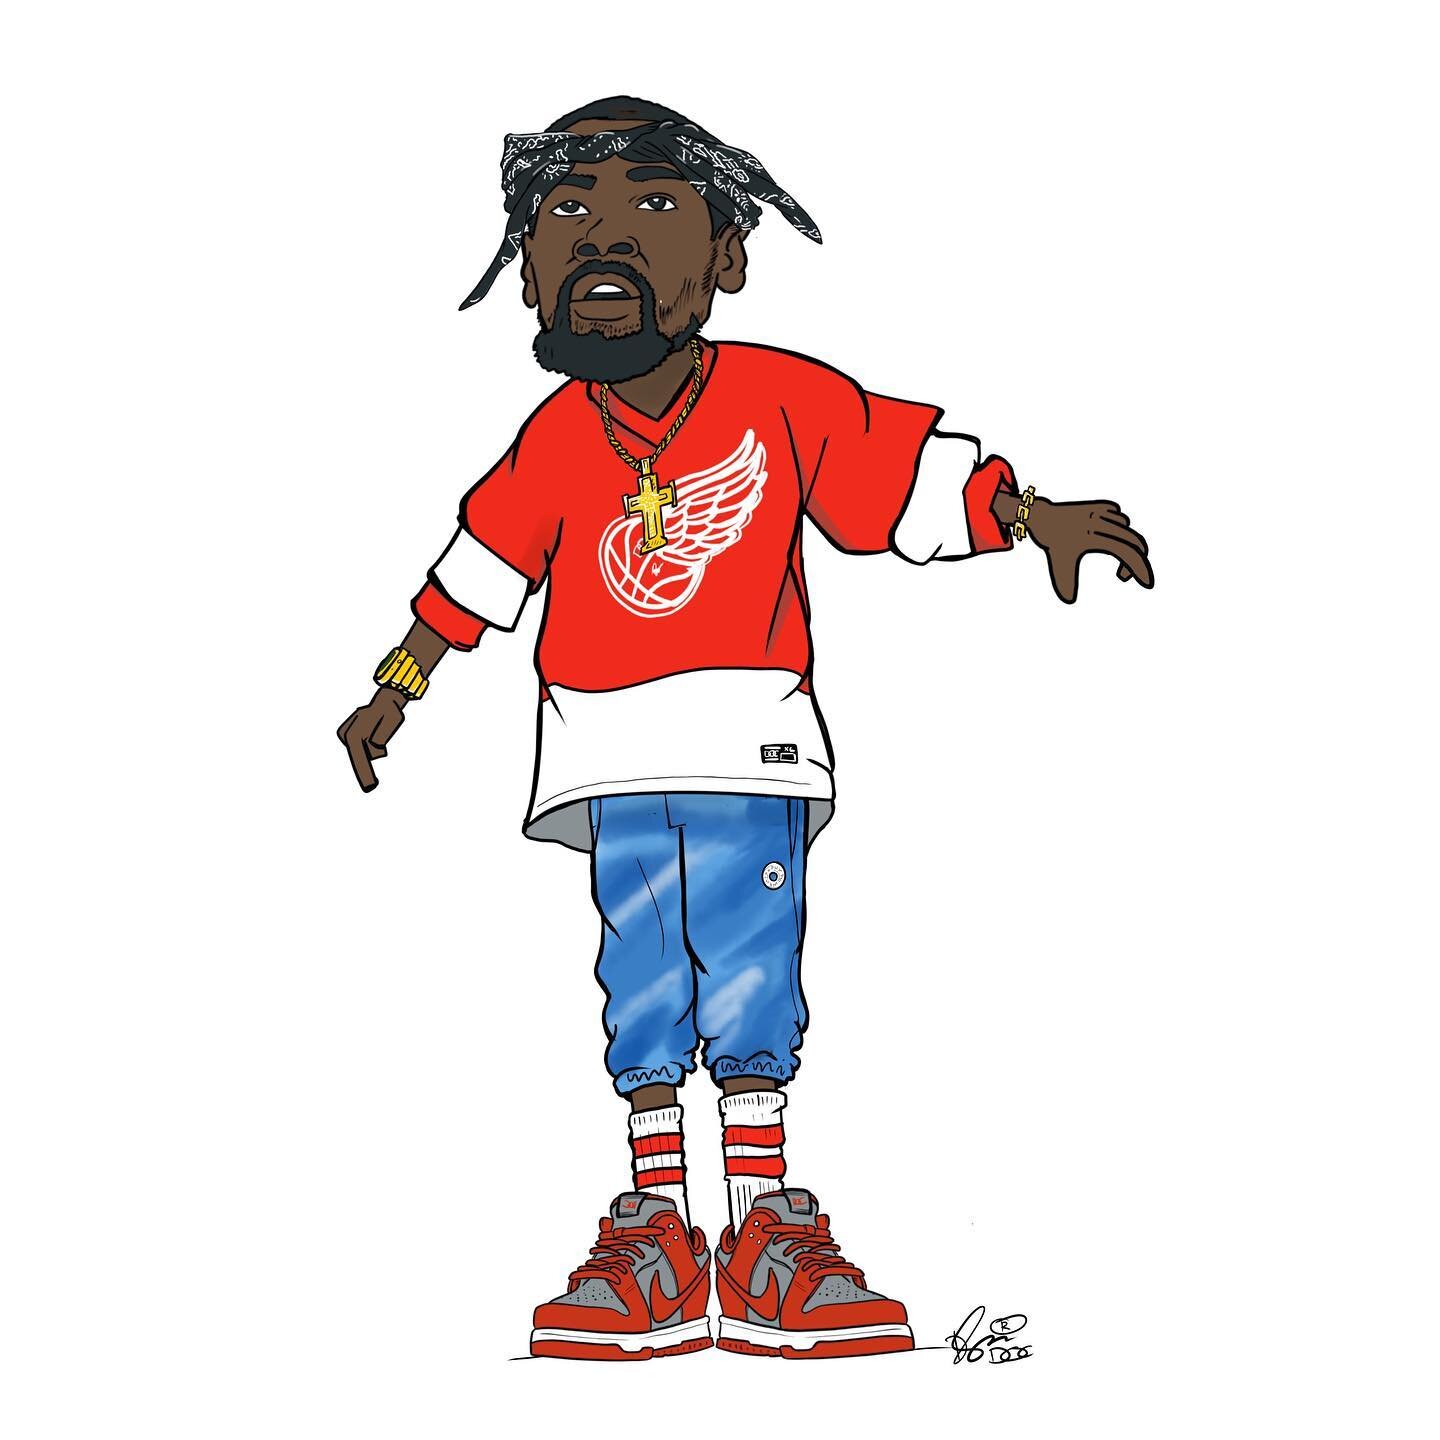 &ldquo;Me against the world&rdquo; - Tupac
.
.
.
 &bull; #docsdoodles #ByDOC #caricature #art #ballharderbydoc #dustincanalin #creativedirector #illustration #sportsArt  #sneakers #nbaArt #kd #tupac #brooklynnets #kevindurant